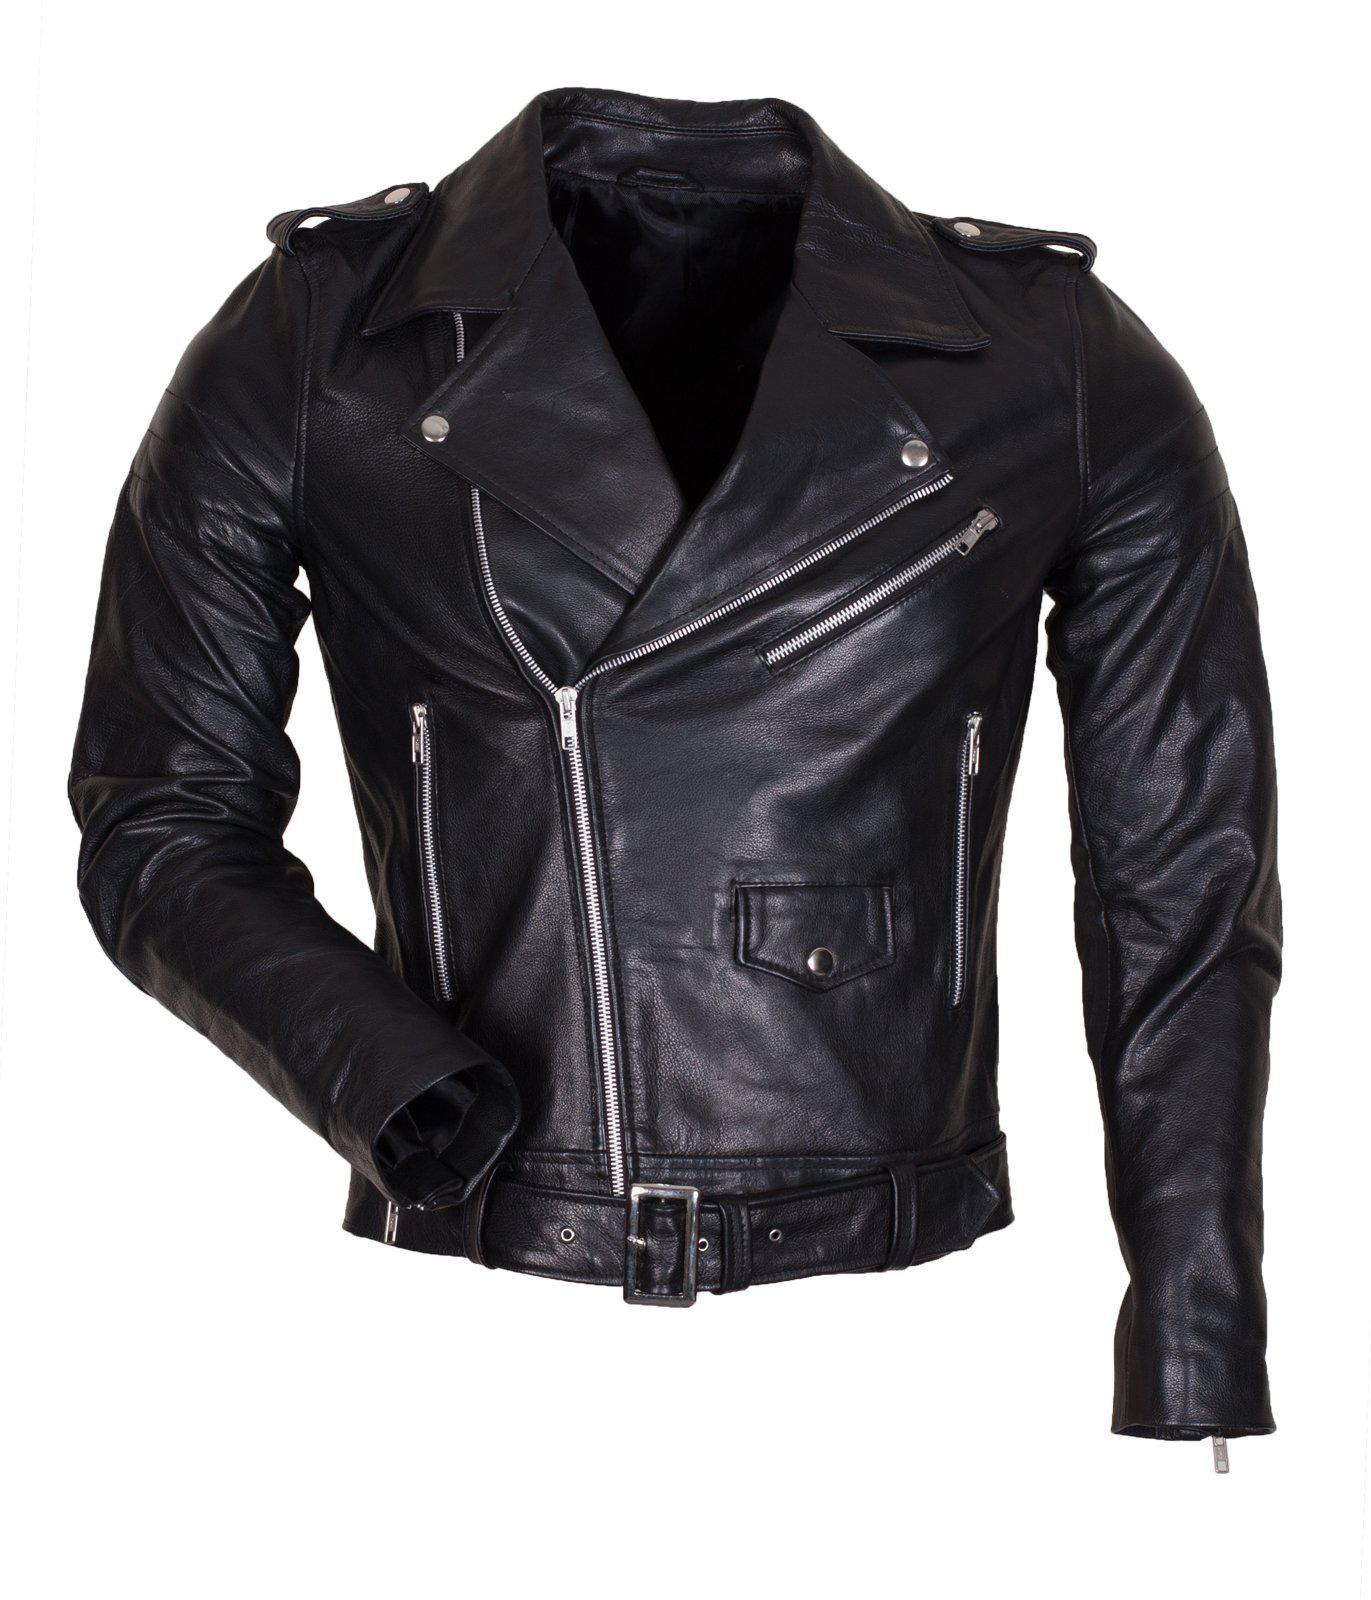 Marlon Brando Leather Jacket for Men